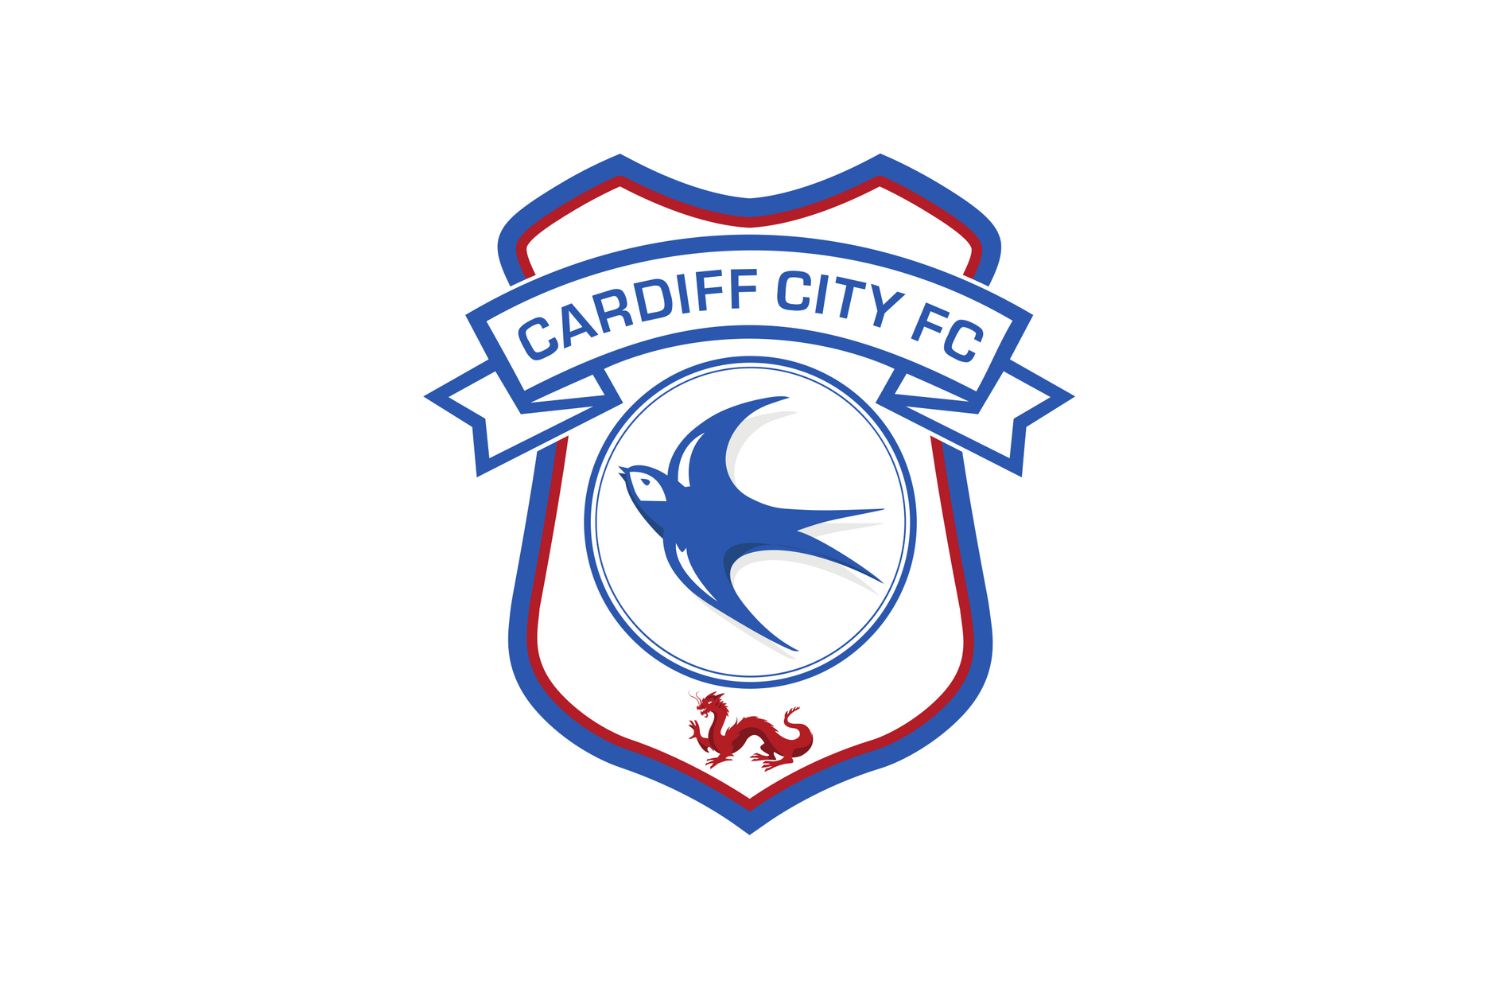 Soccer: Cardiff City FC